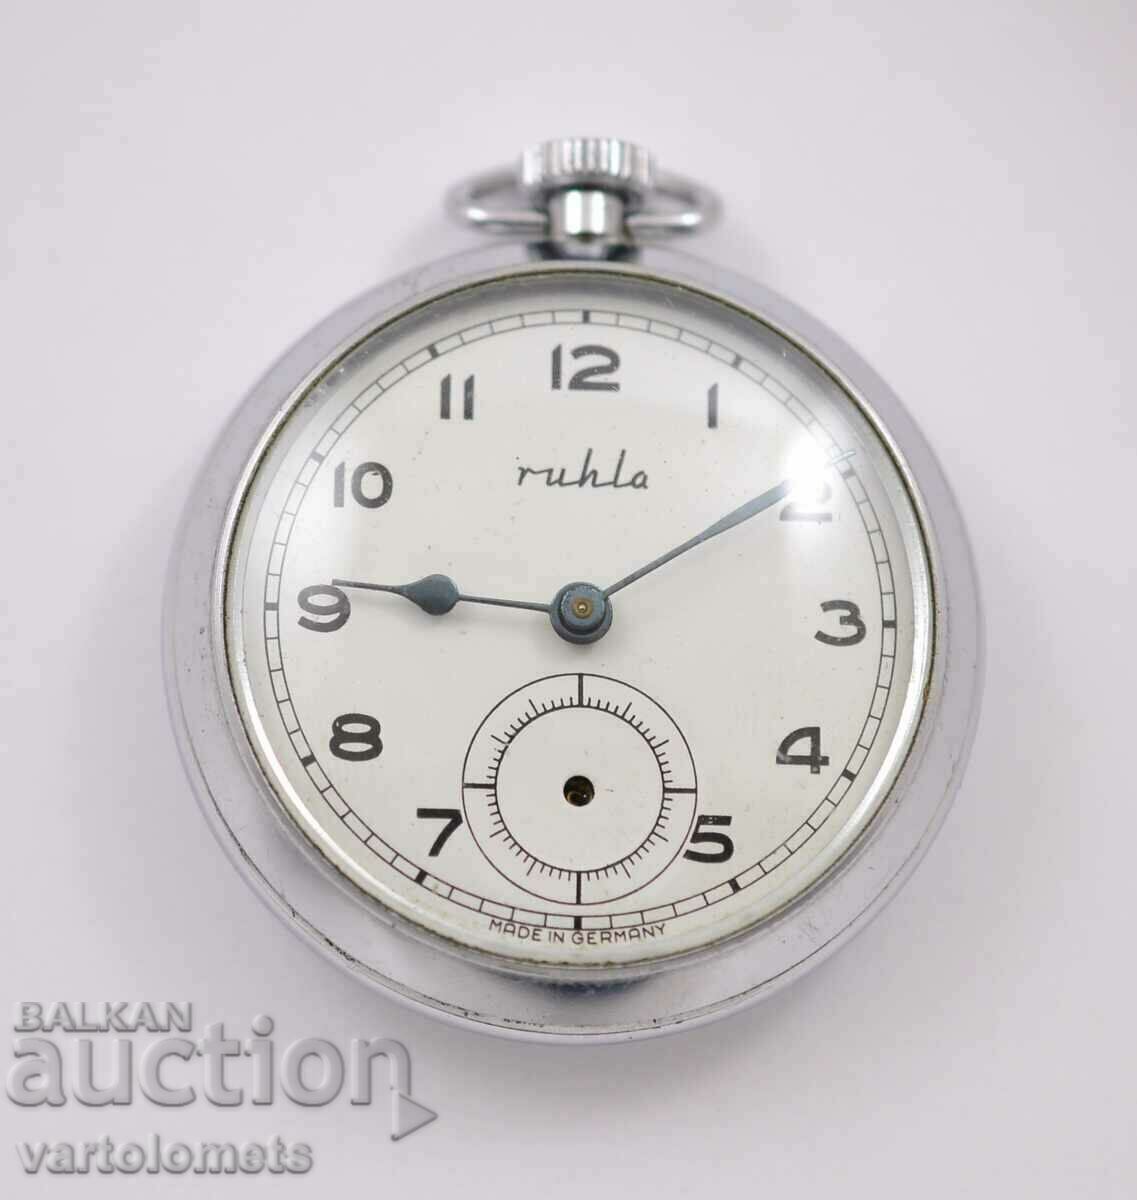 Vintage RUHLA pocket watch - not working